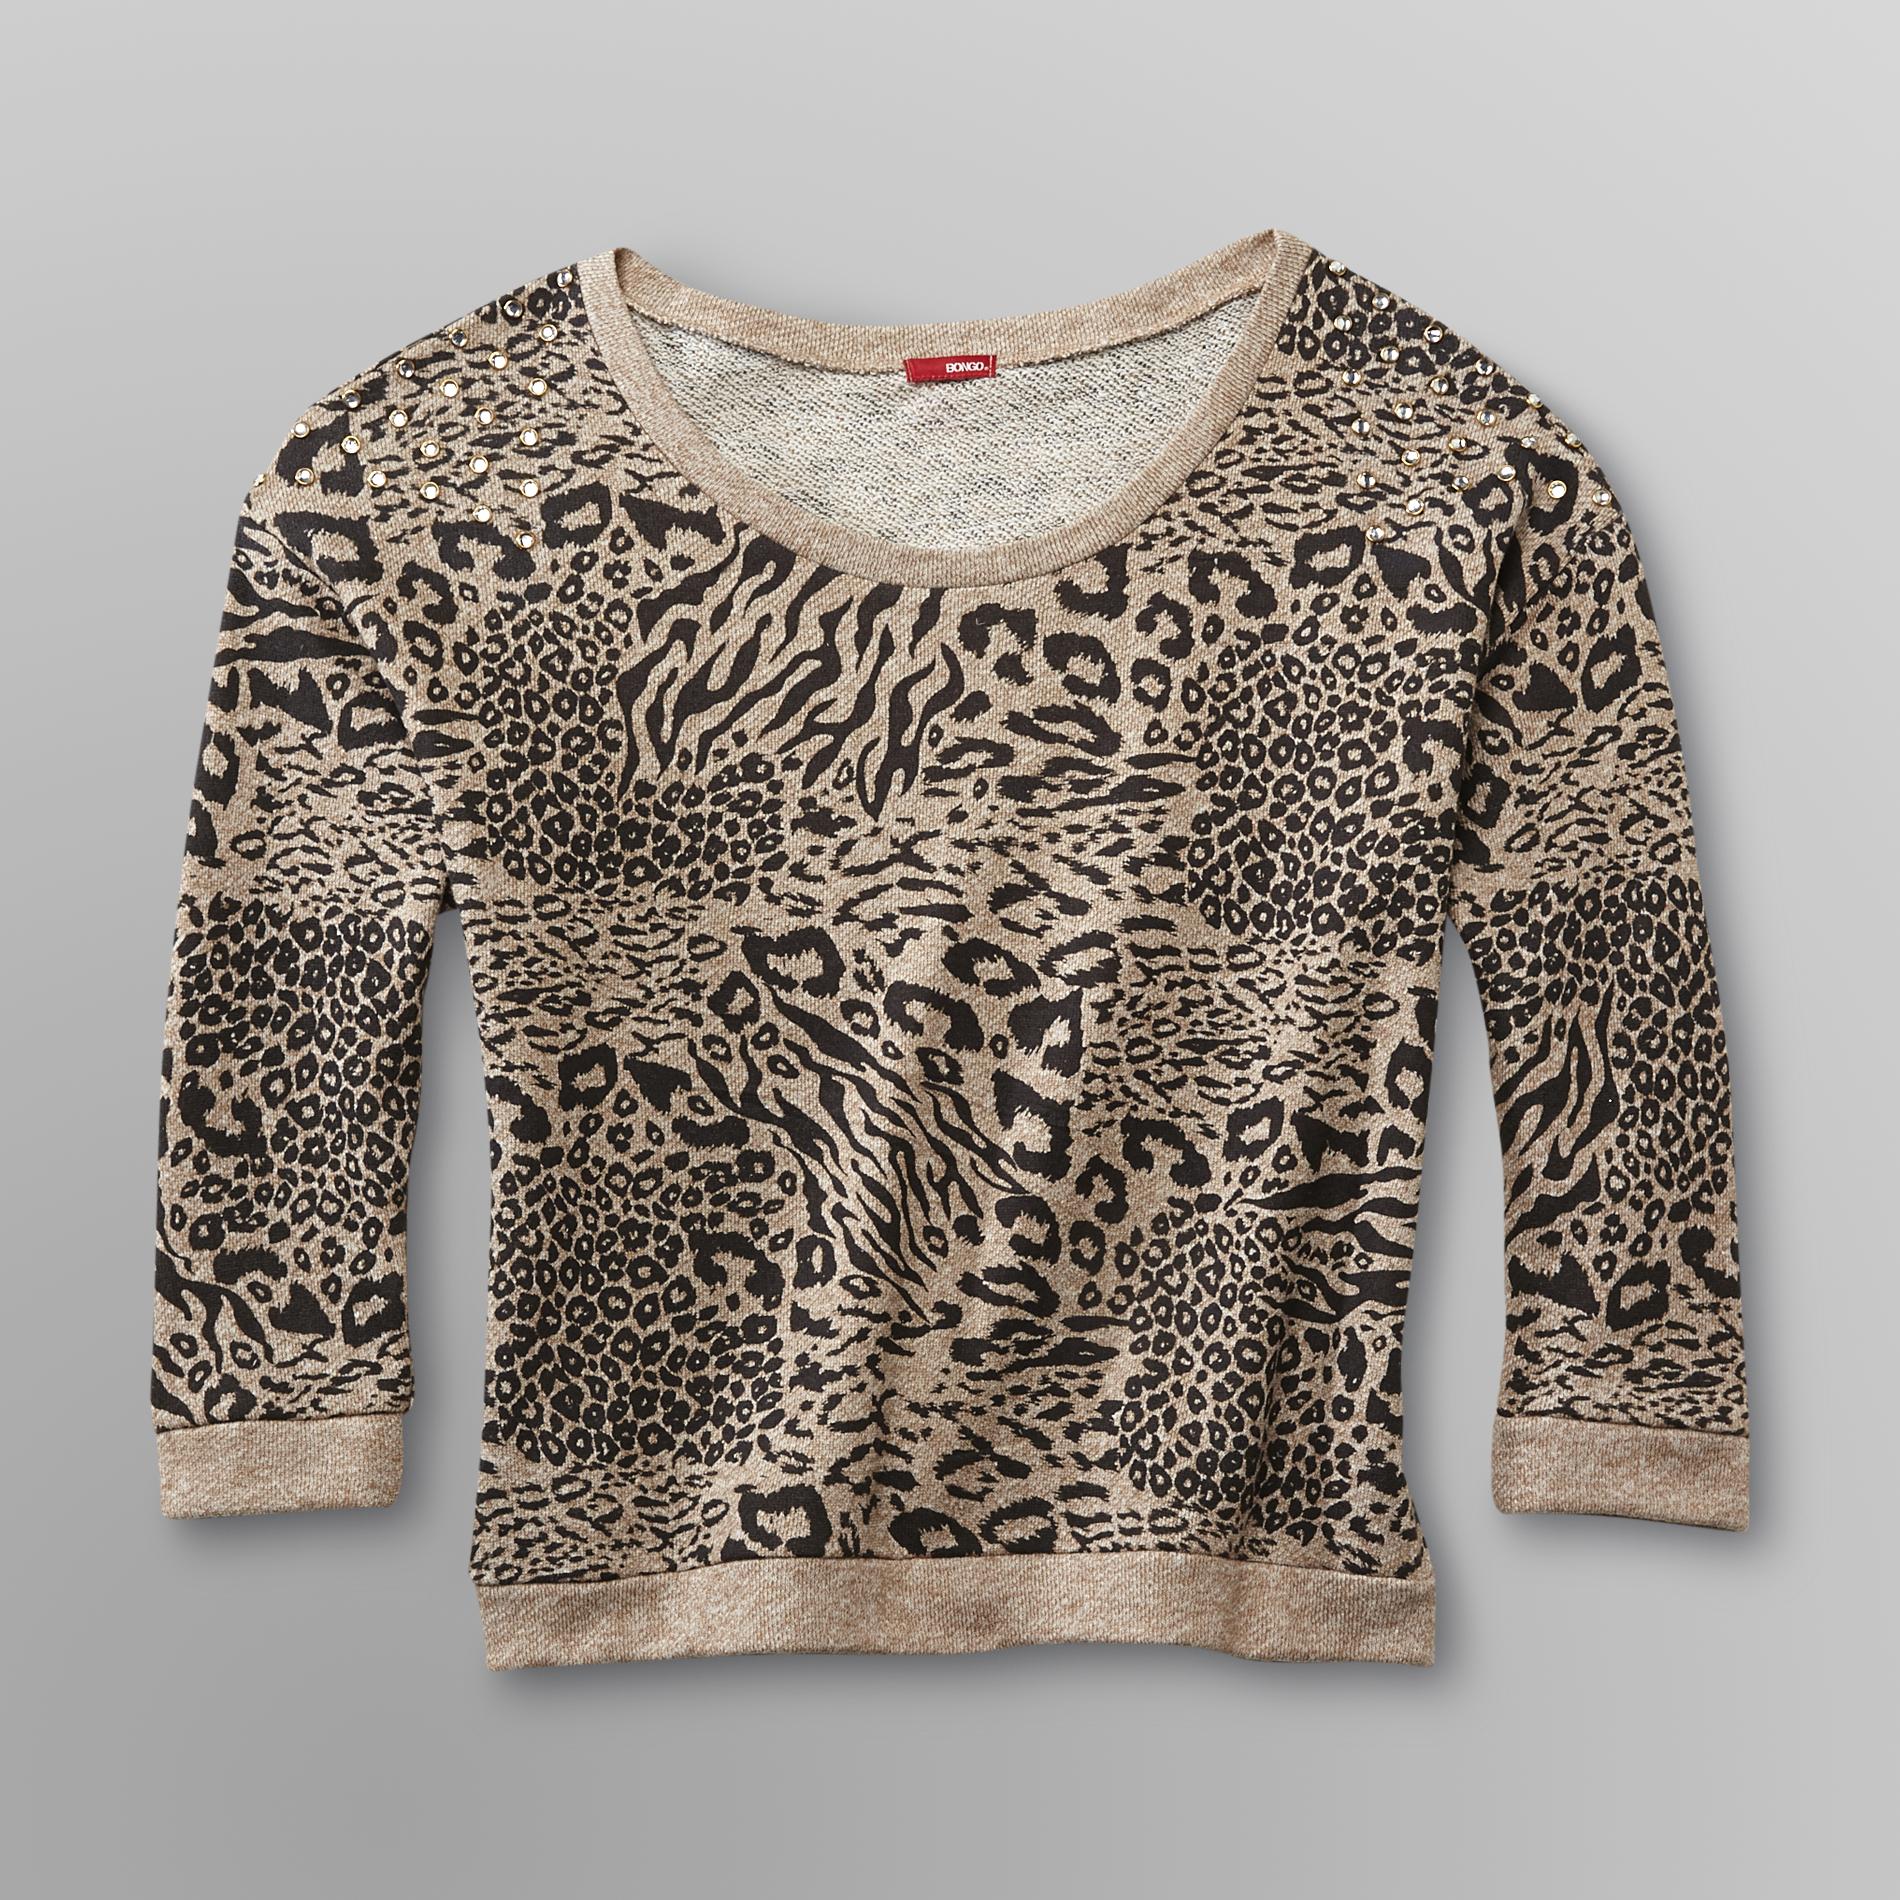 Bongo Junior's French Terry Sweatshirt - Animal Print